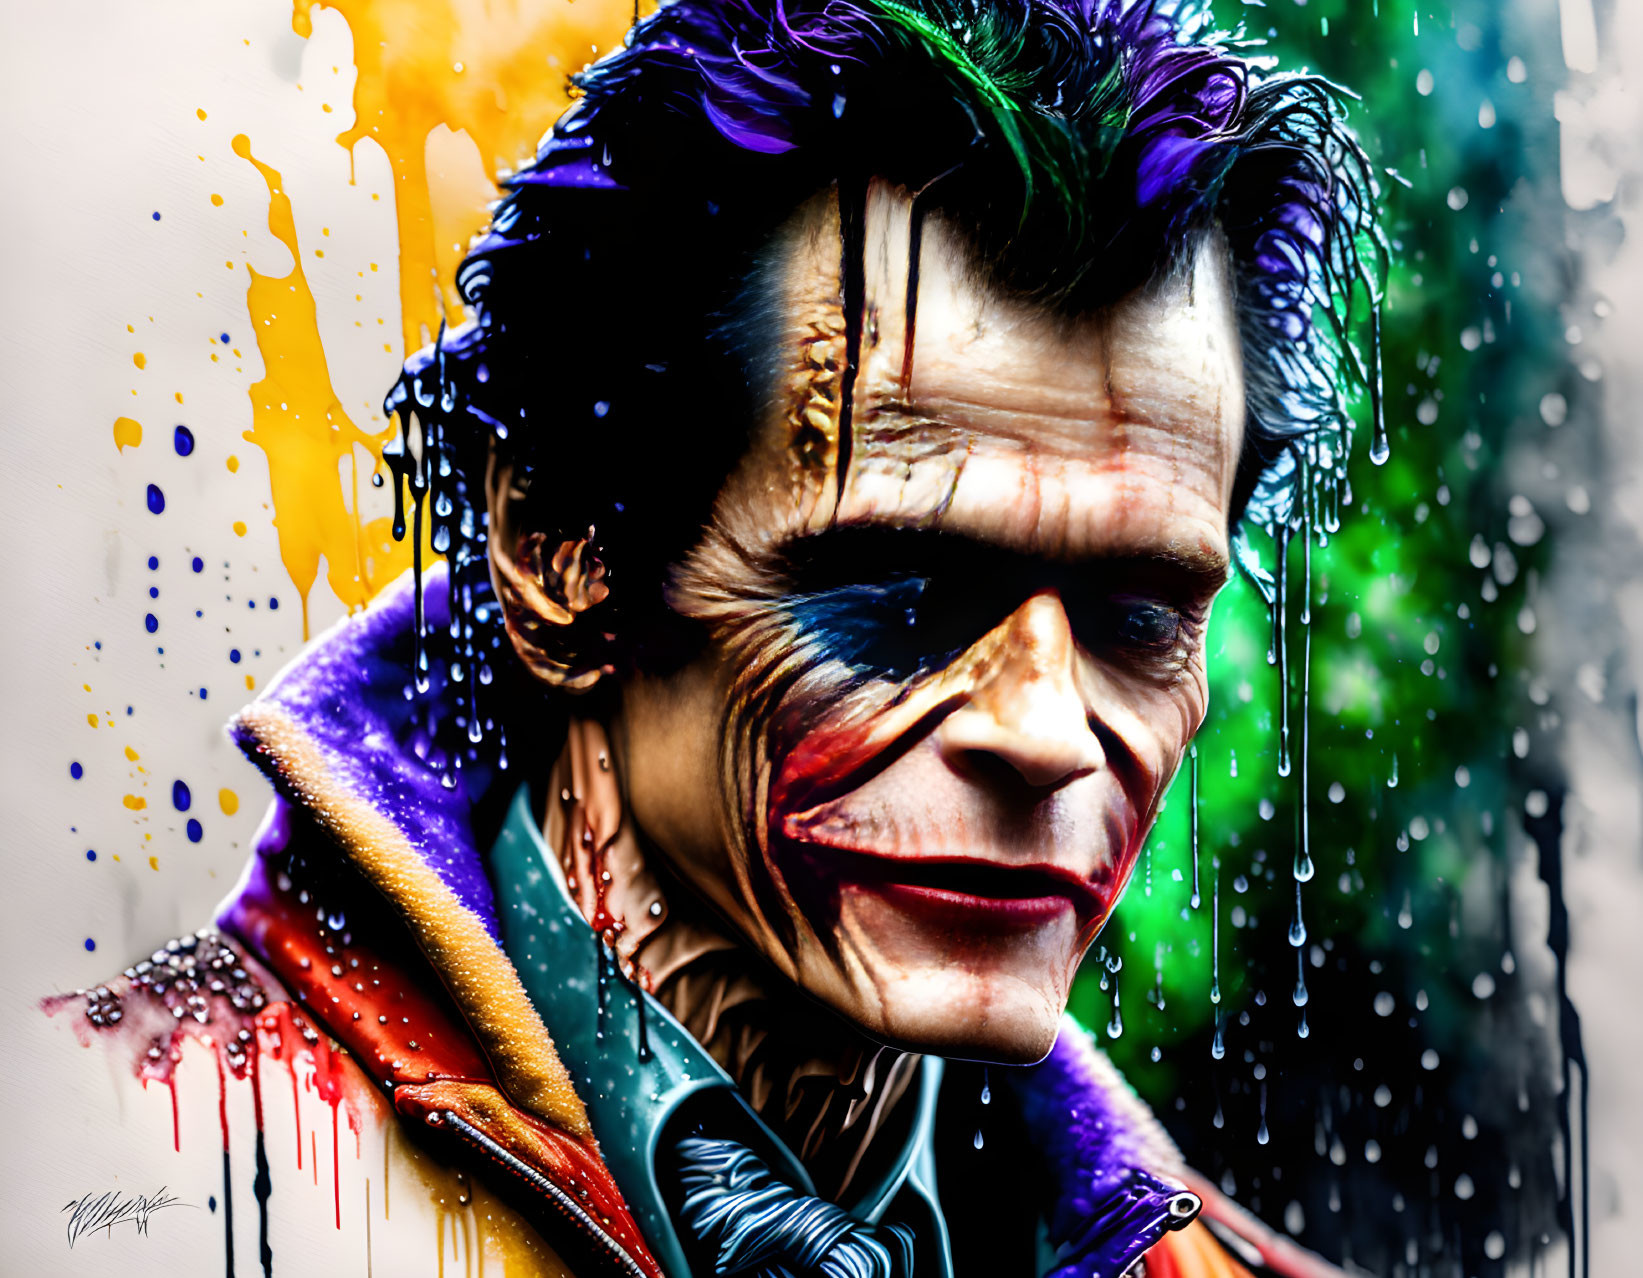 Willem Dafoe as The Joker